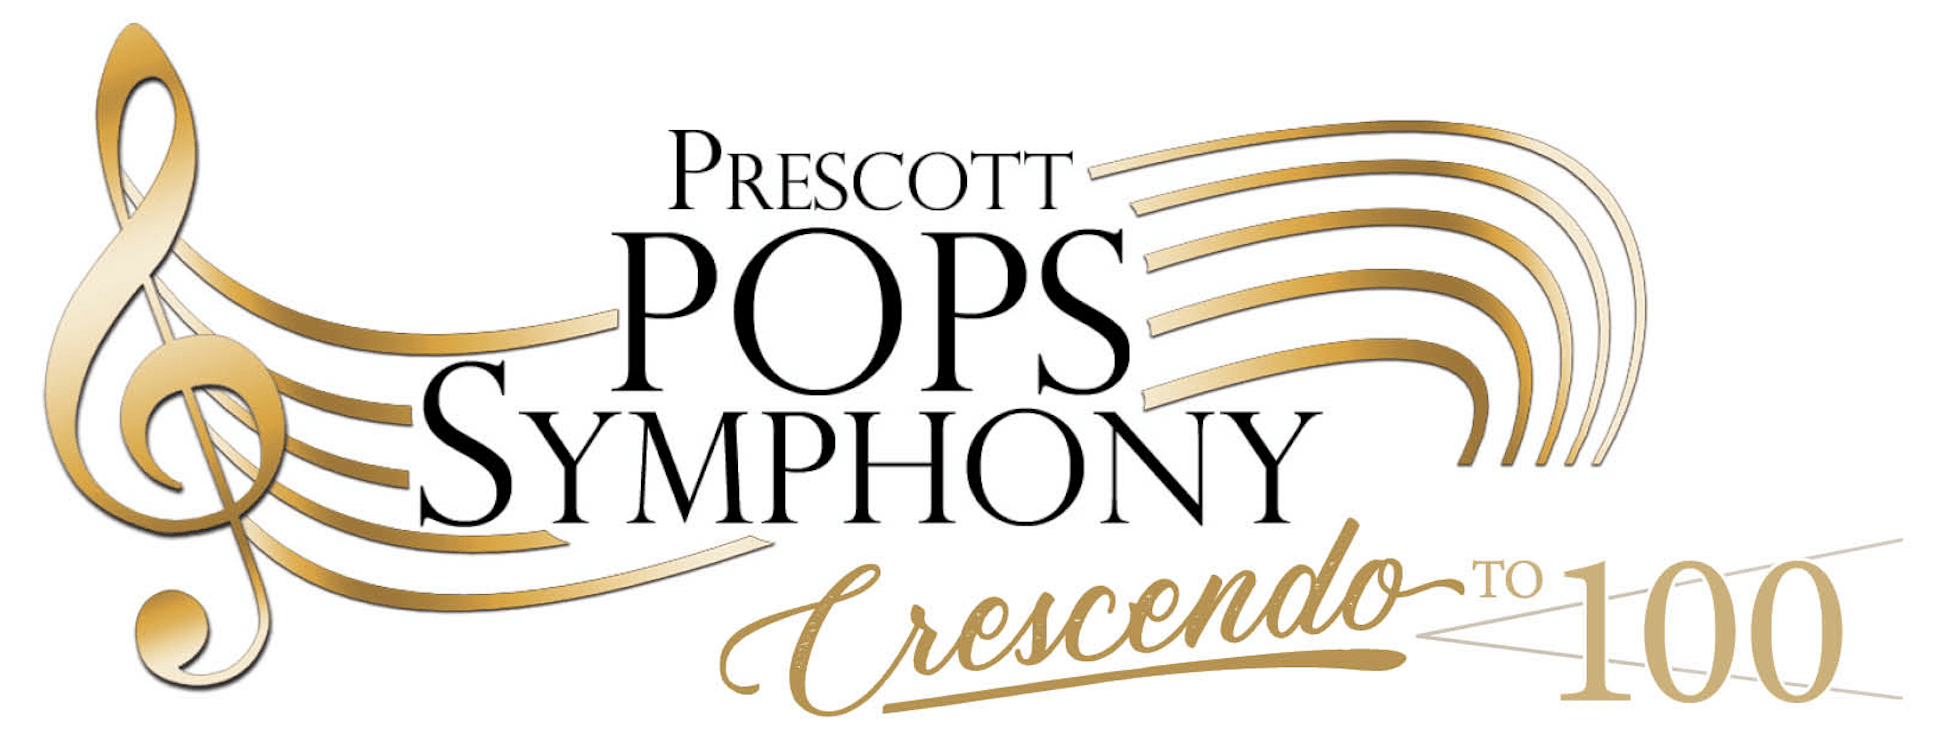 Prescott Pops Crescendo to 100 Donation